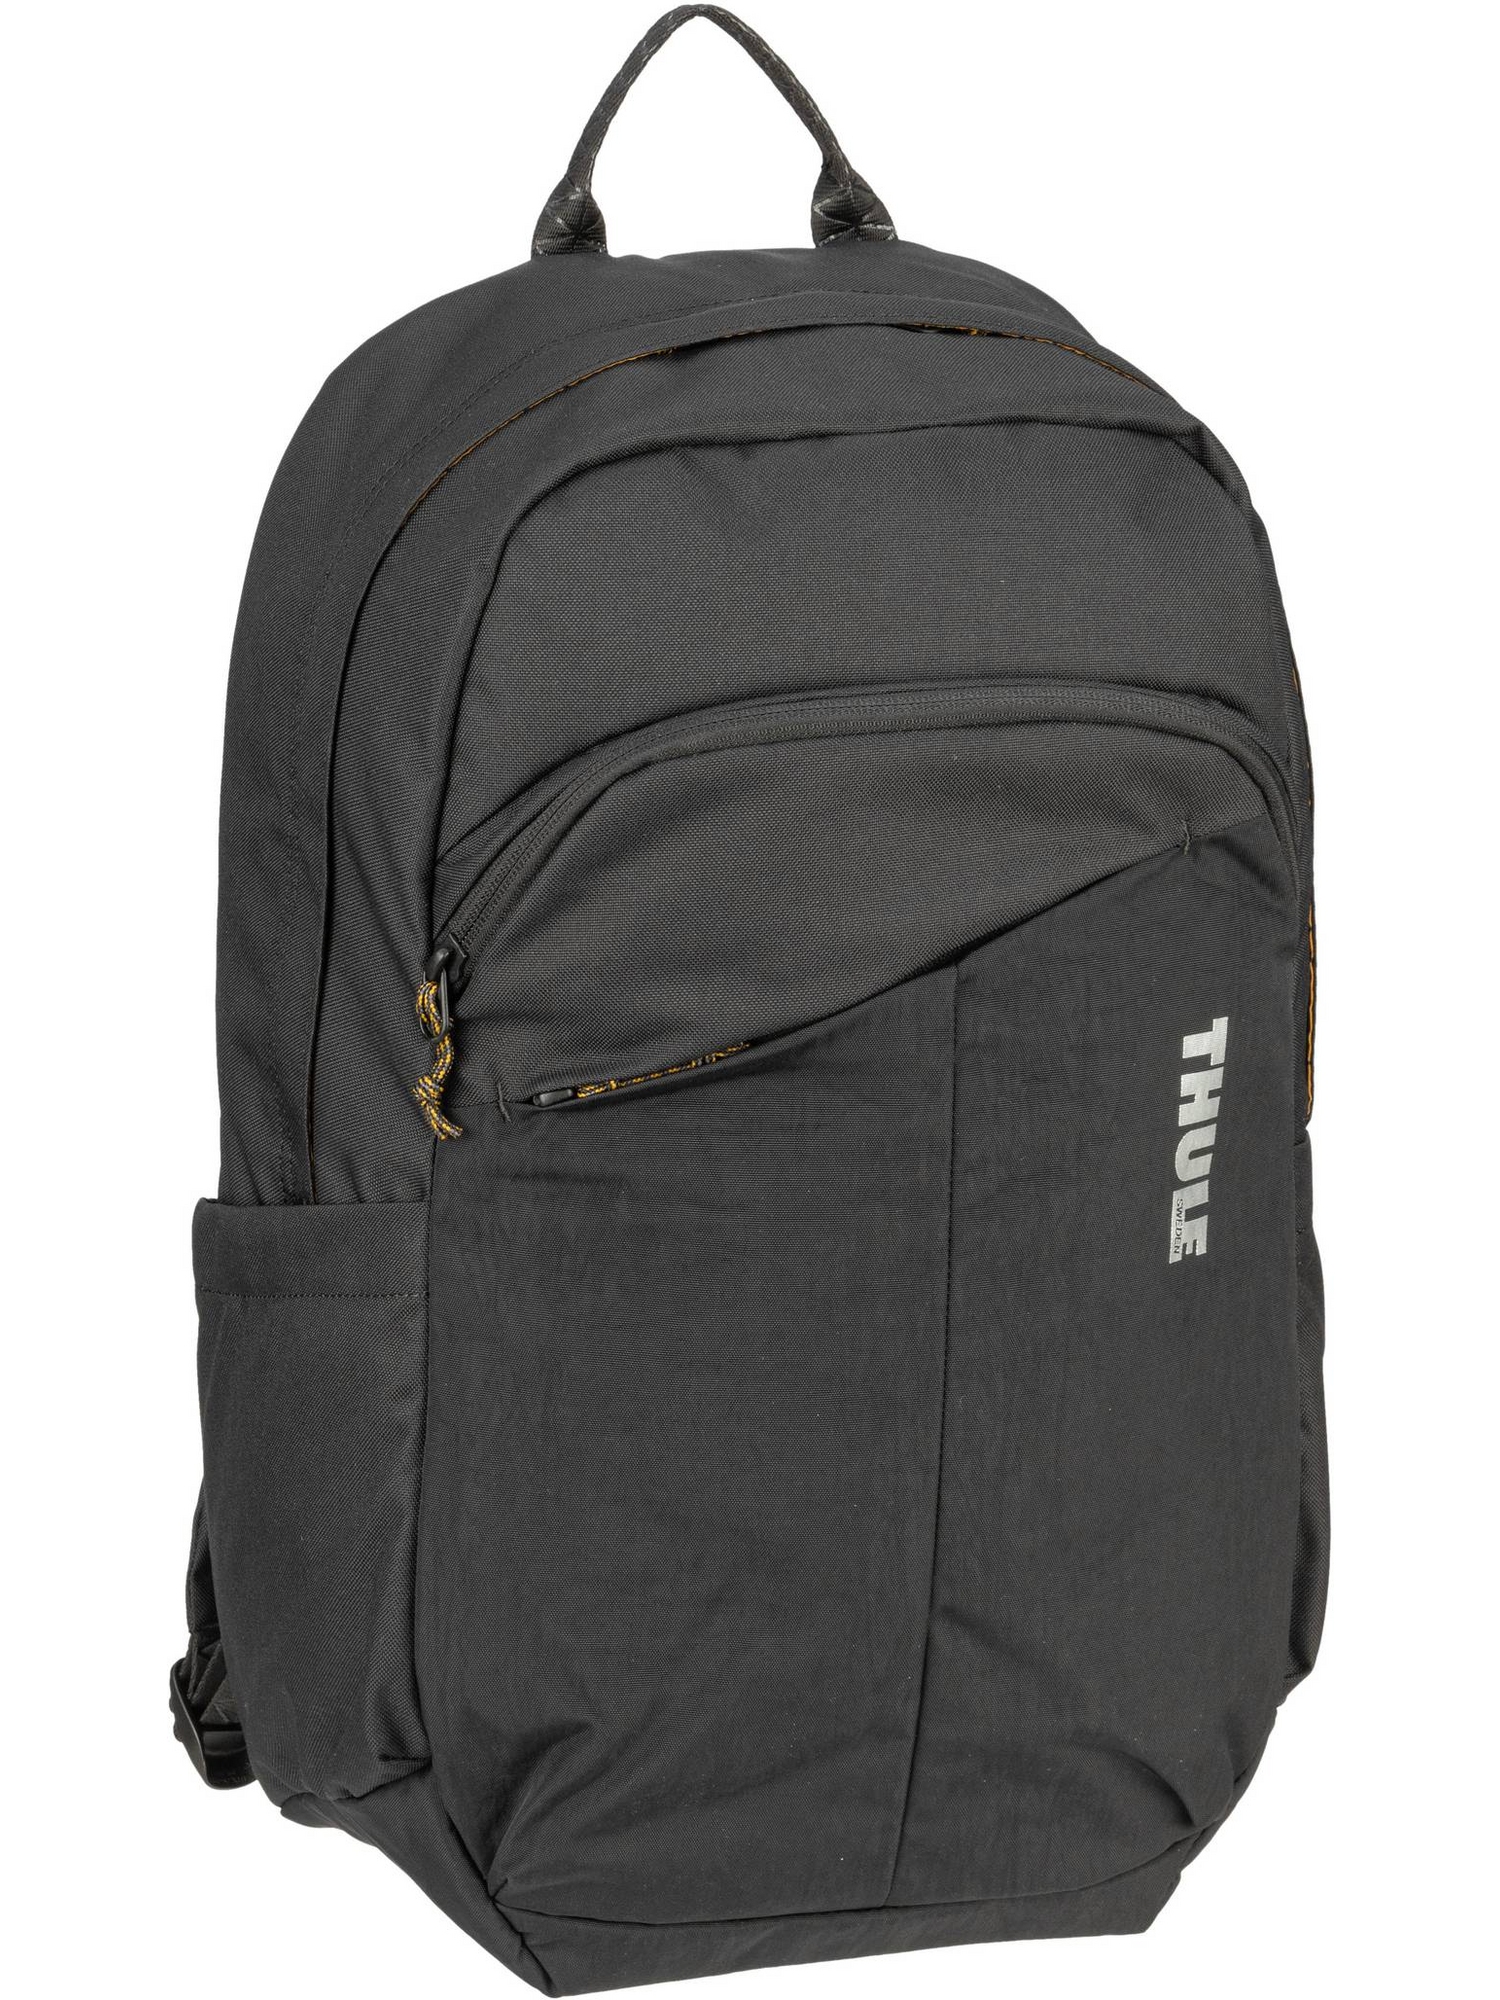 Рюкзак Thule/Backpack Indago Backpack 23L, черный рюкзак thule backpack indago backpack 23l цвет dense teal